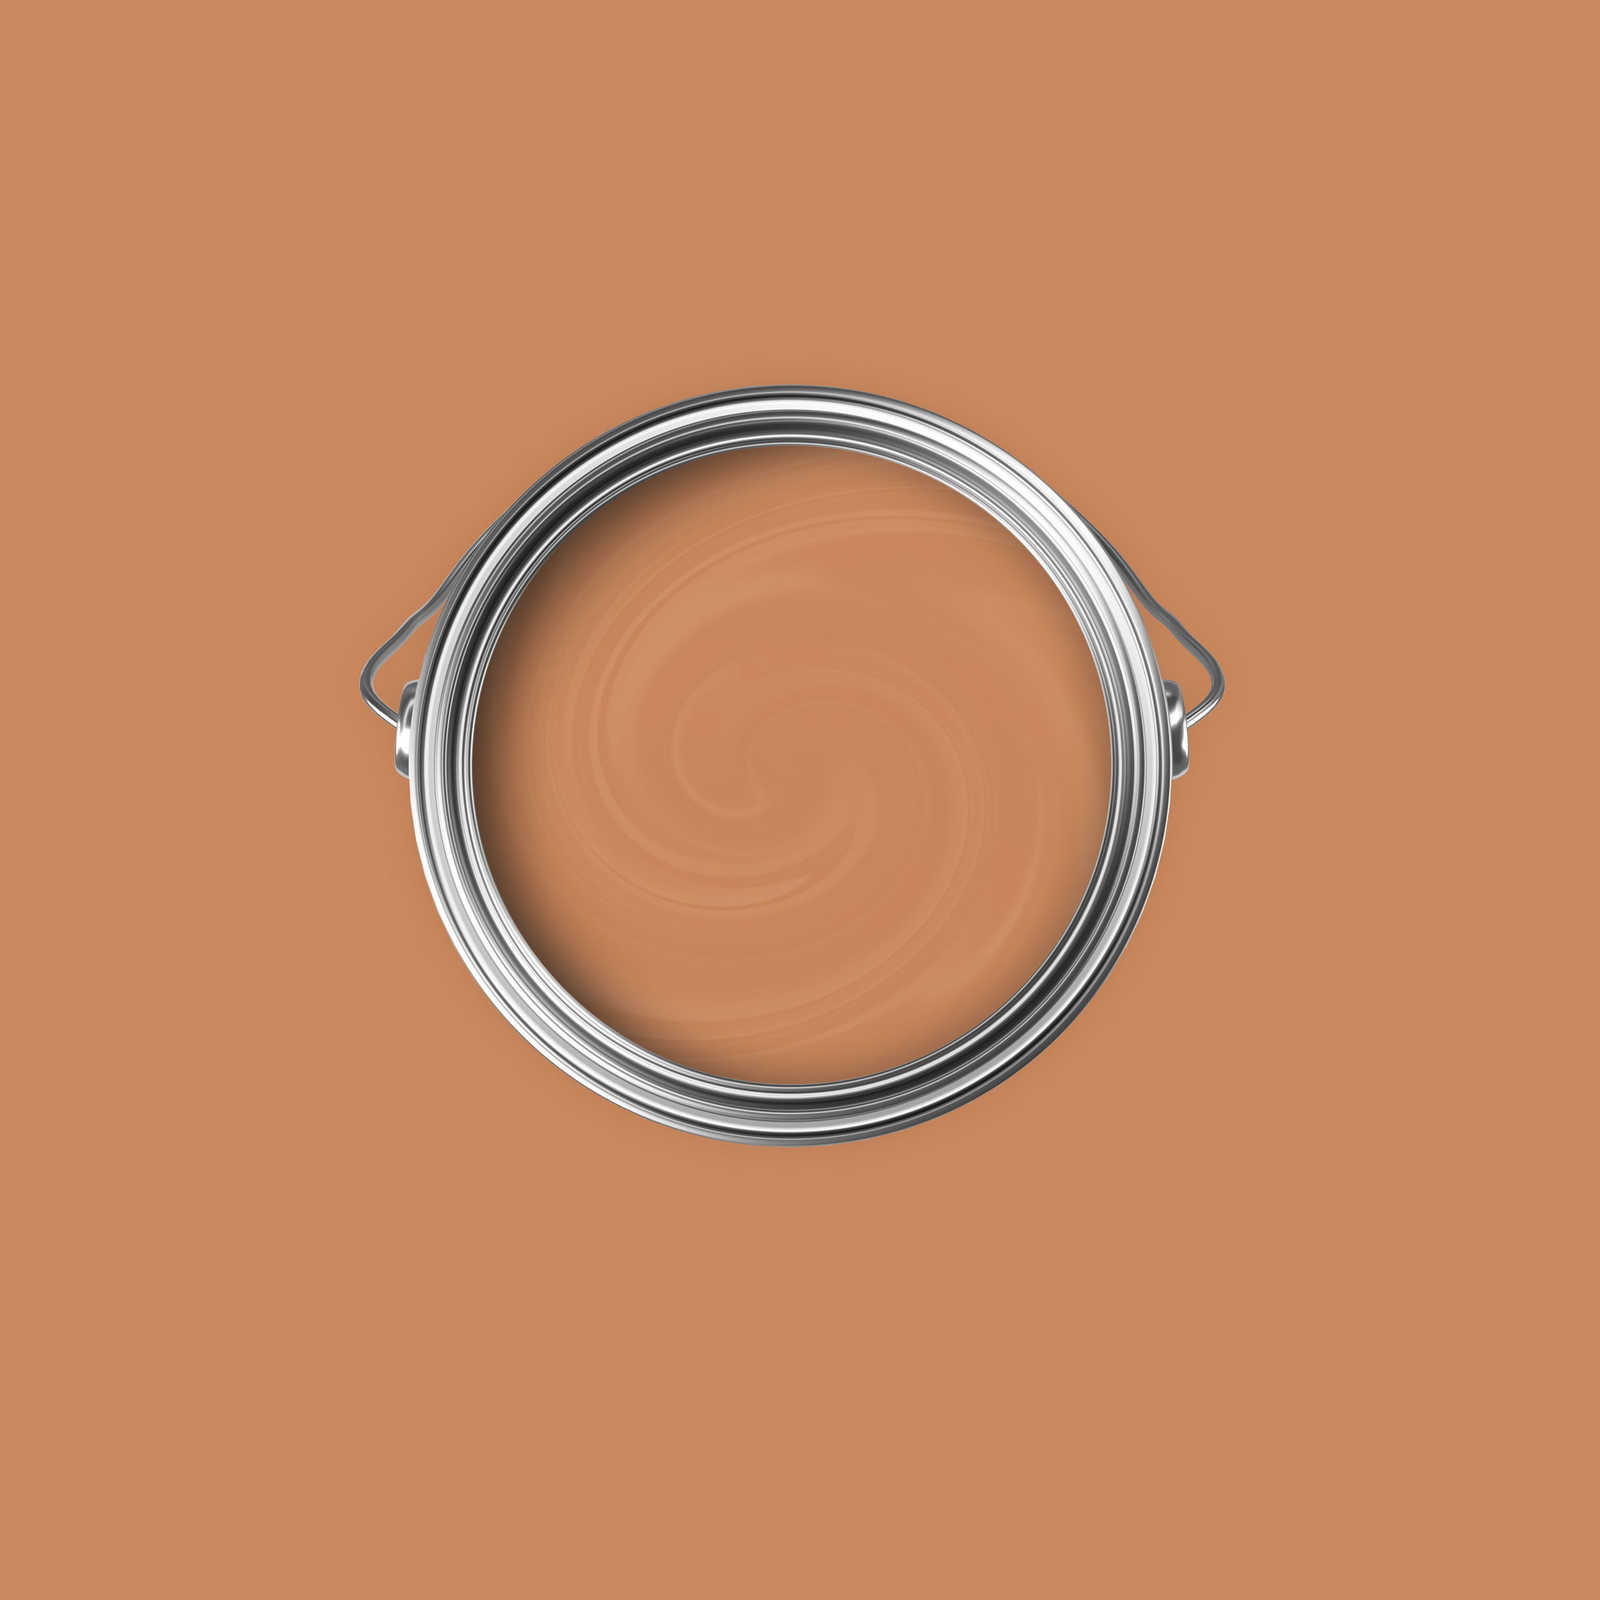             Premium Wall Paint serene copper »Pretty Peach« NW904 – 2.5 litre
        